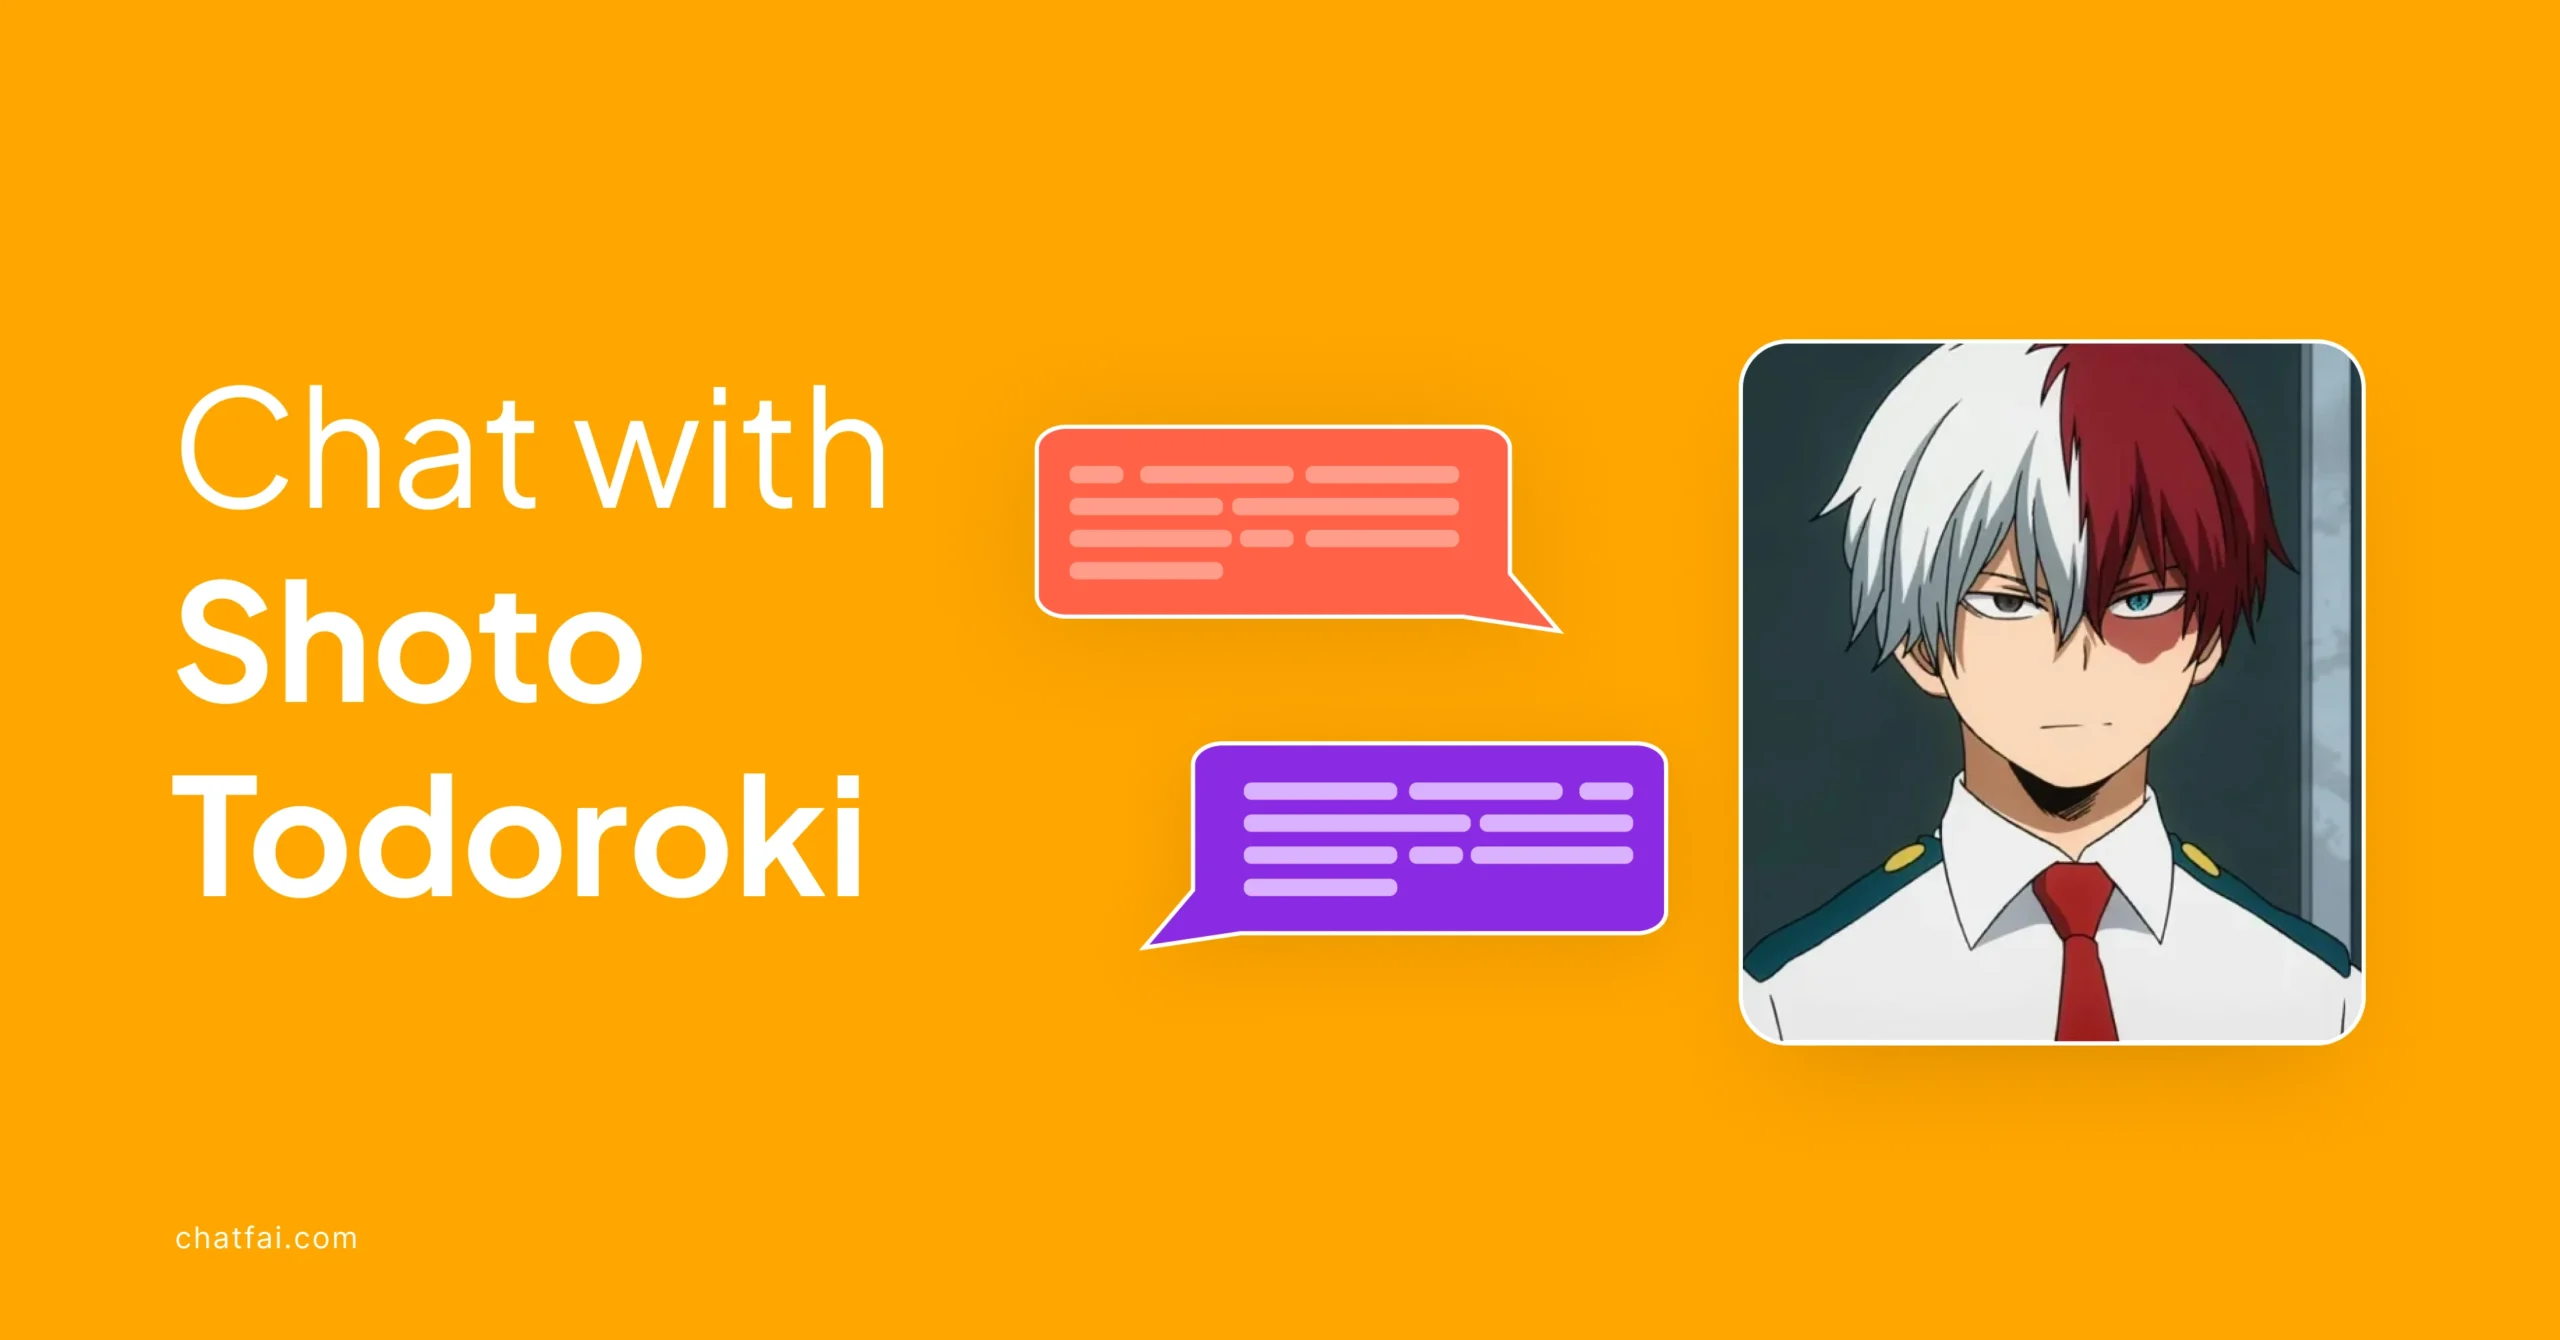 Chat with Shoto Todoroki: A ChatFAI Experience